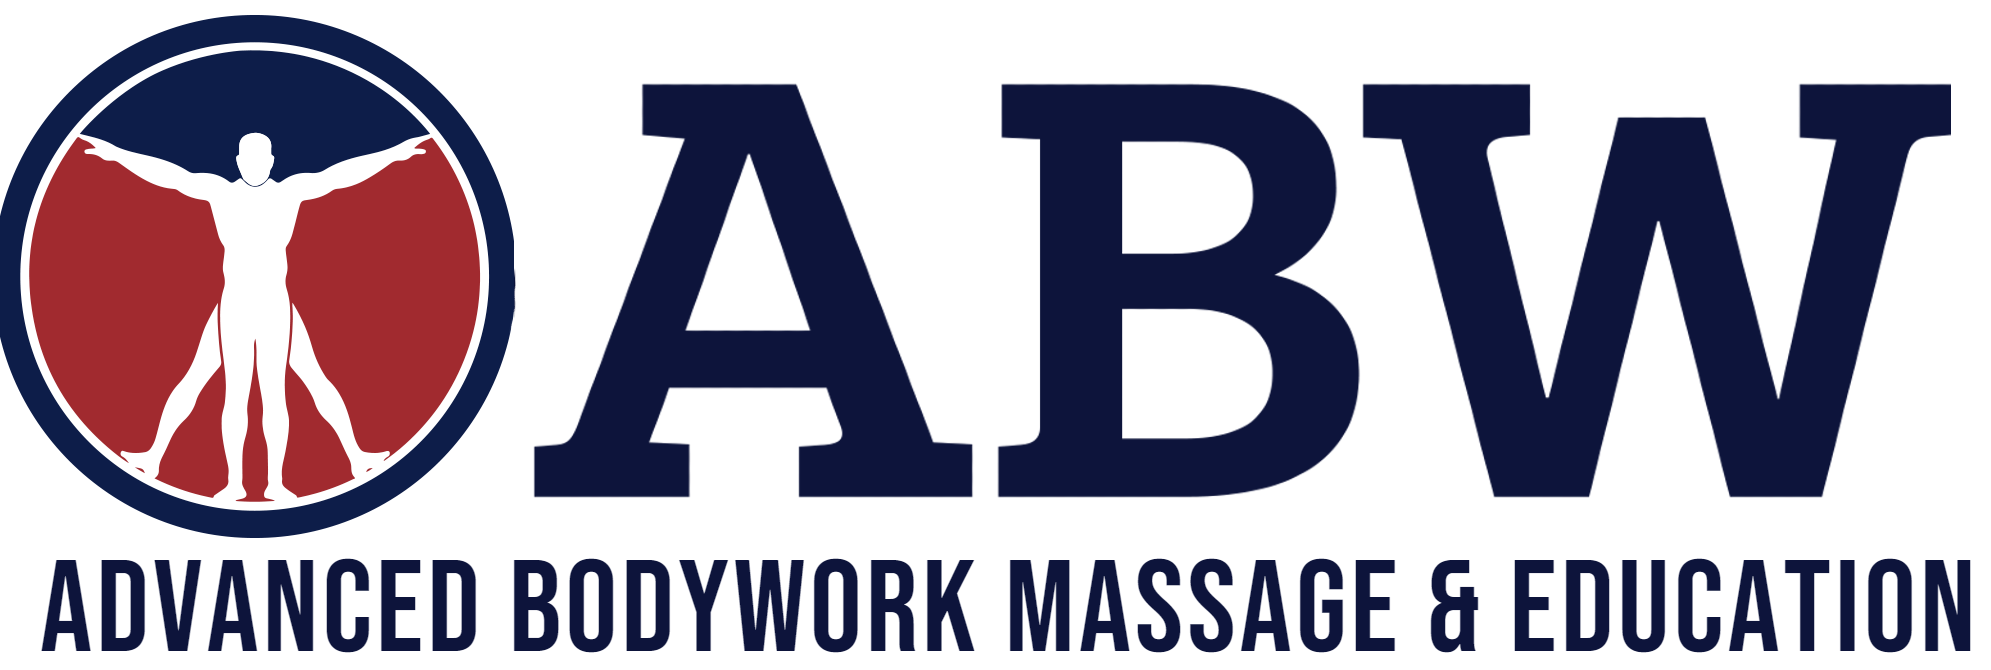 ABW Medical Massage Clinic